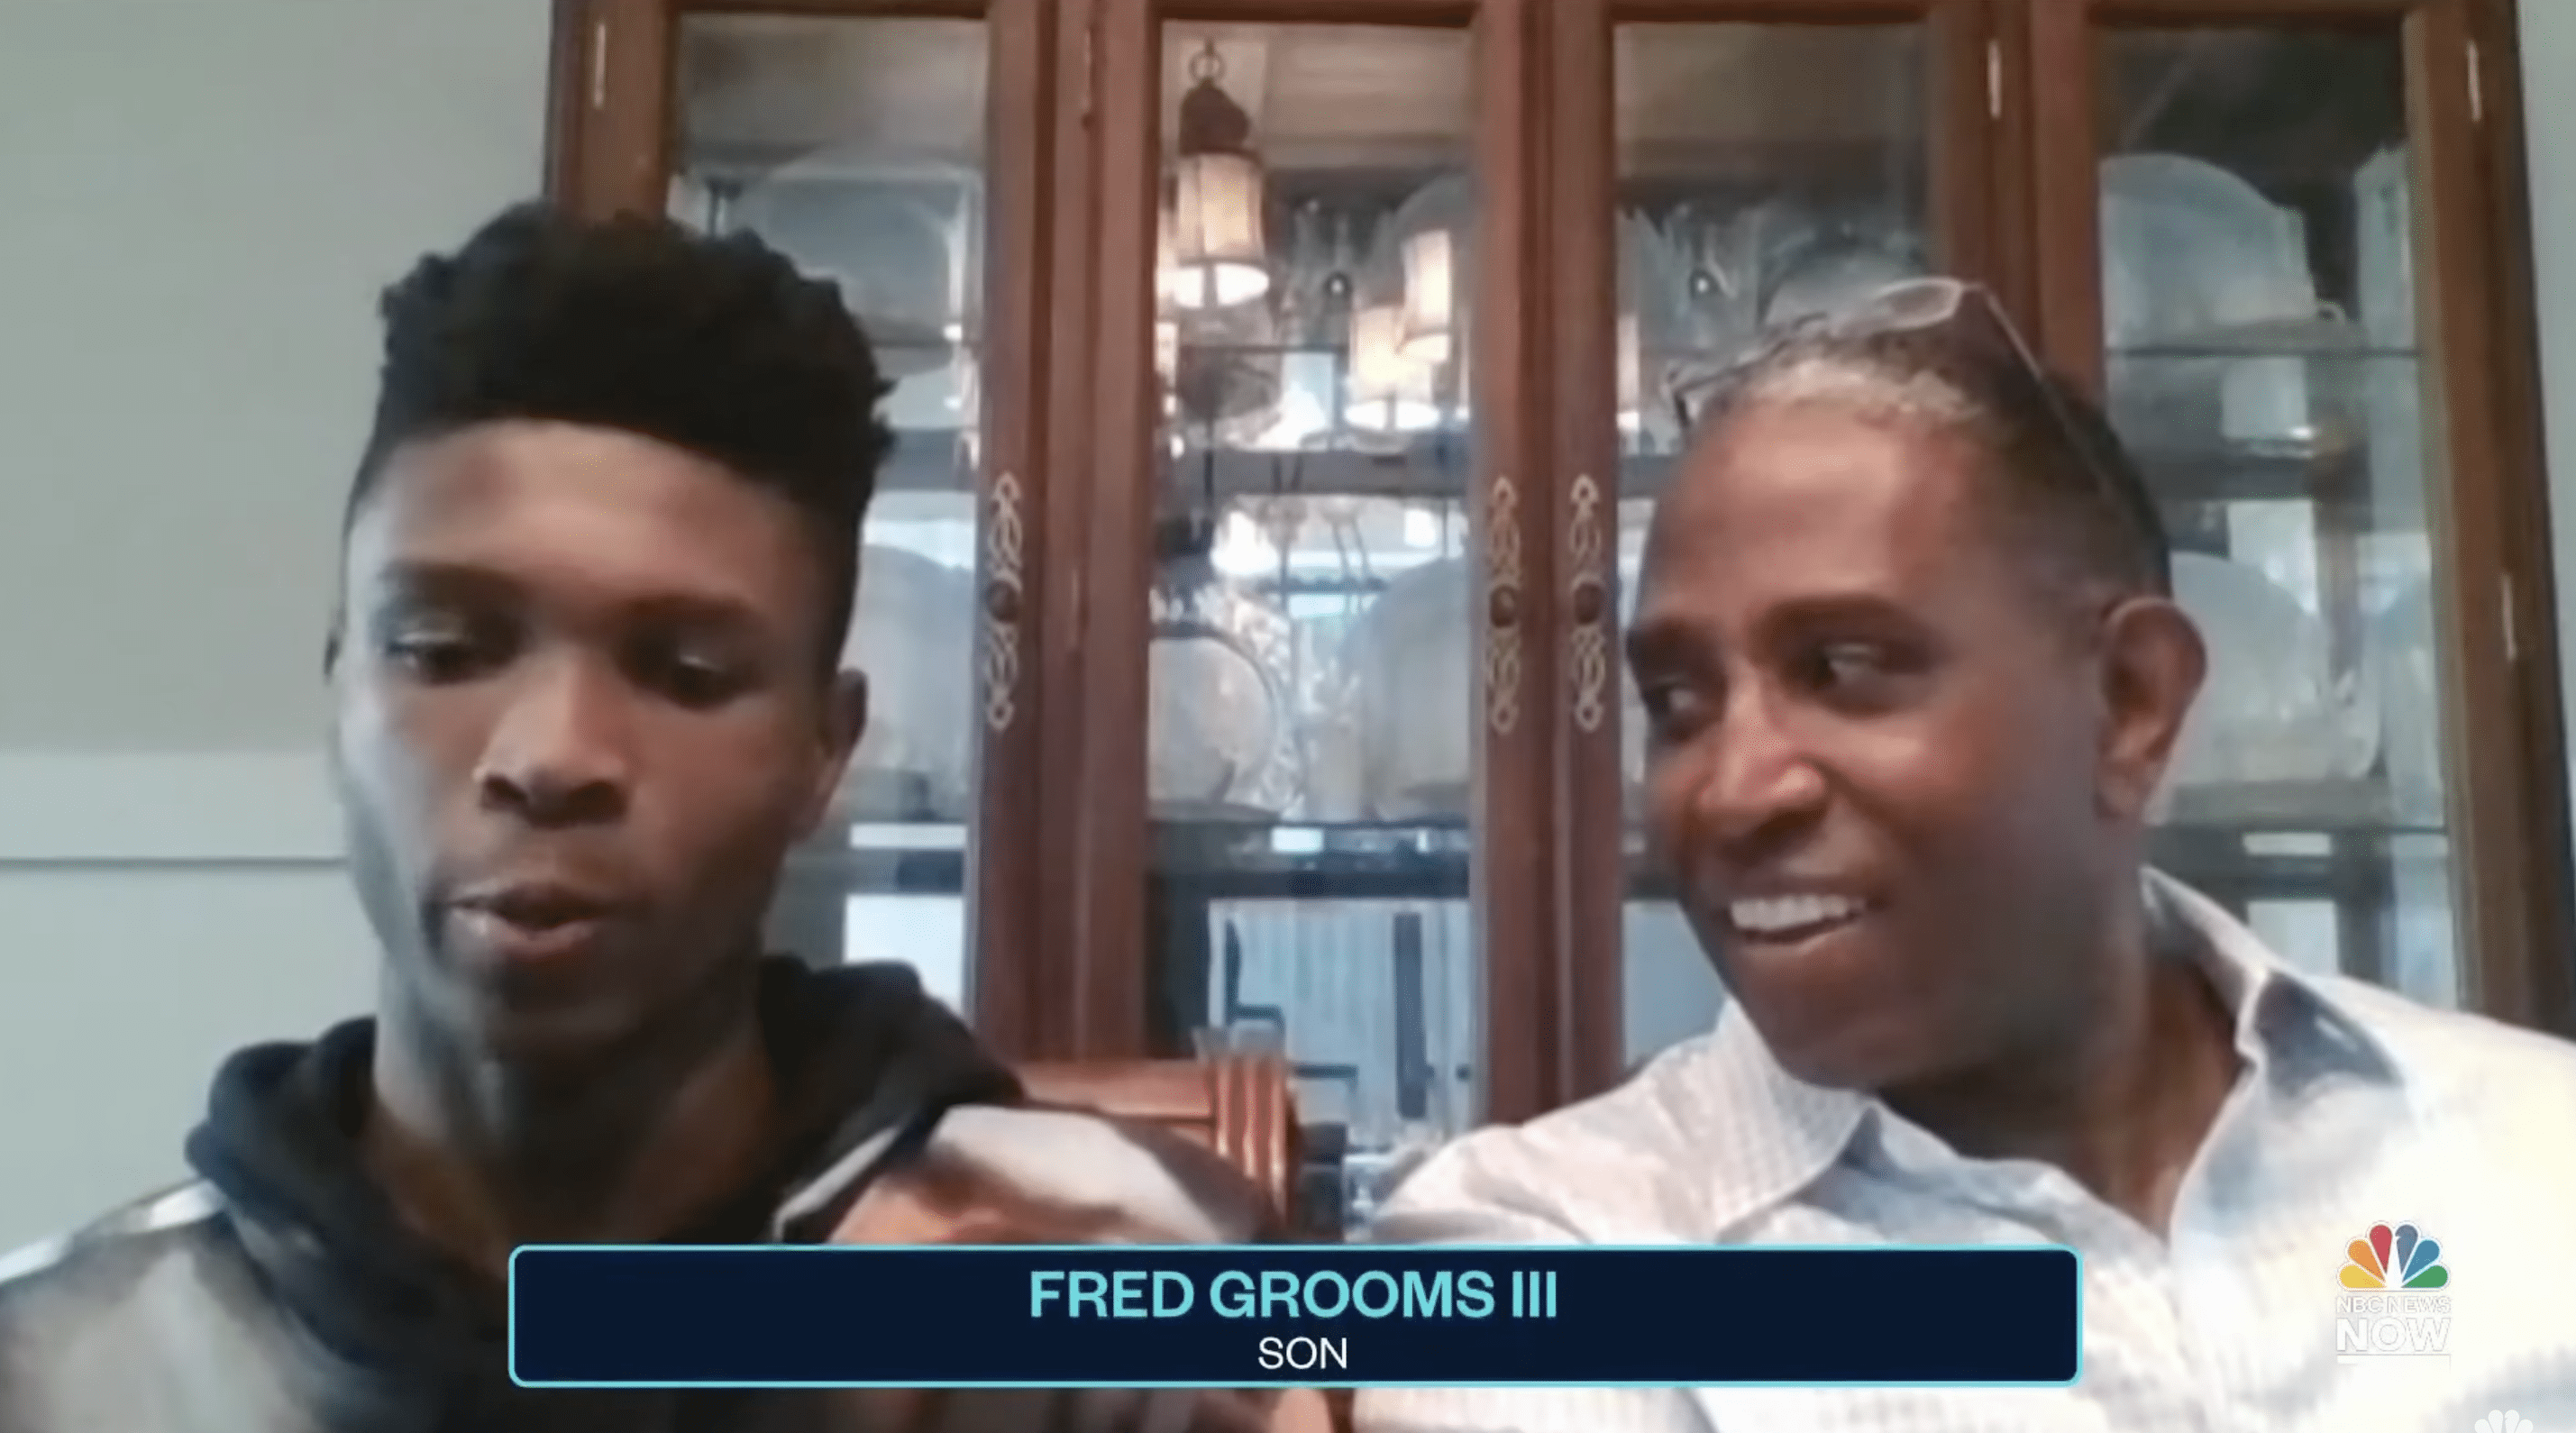 Fred Grooms III mit seinem Vater, Major Grooms Jr. | Quelle: YouTube.com/NBC News